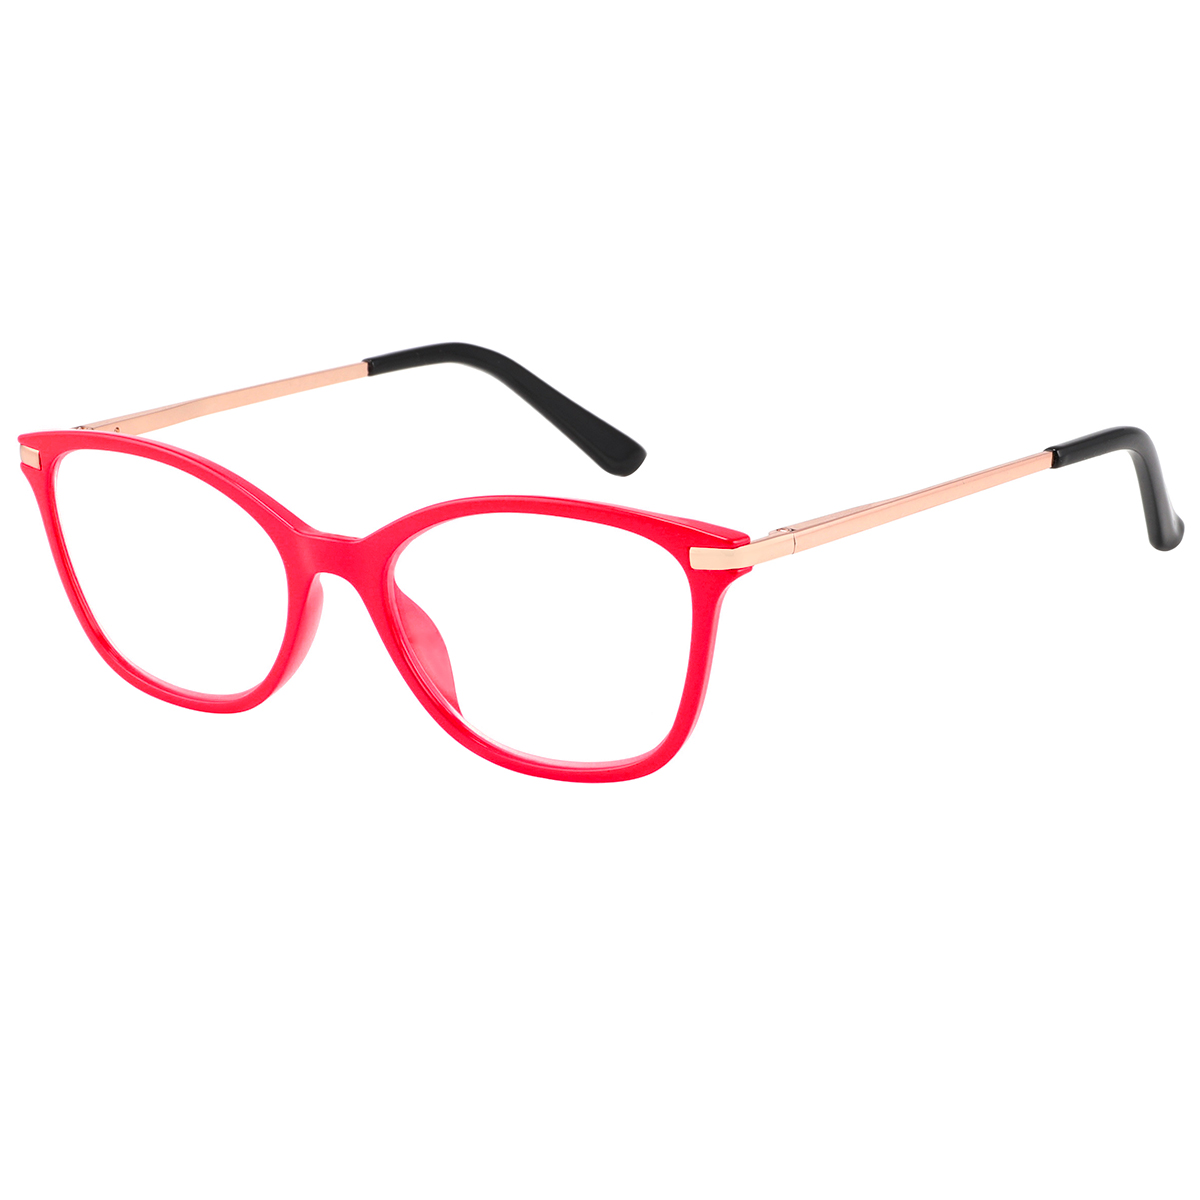 Bengal - Cat-eye Red Reading Glasses for Women